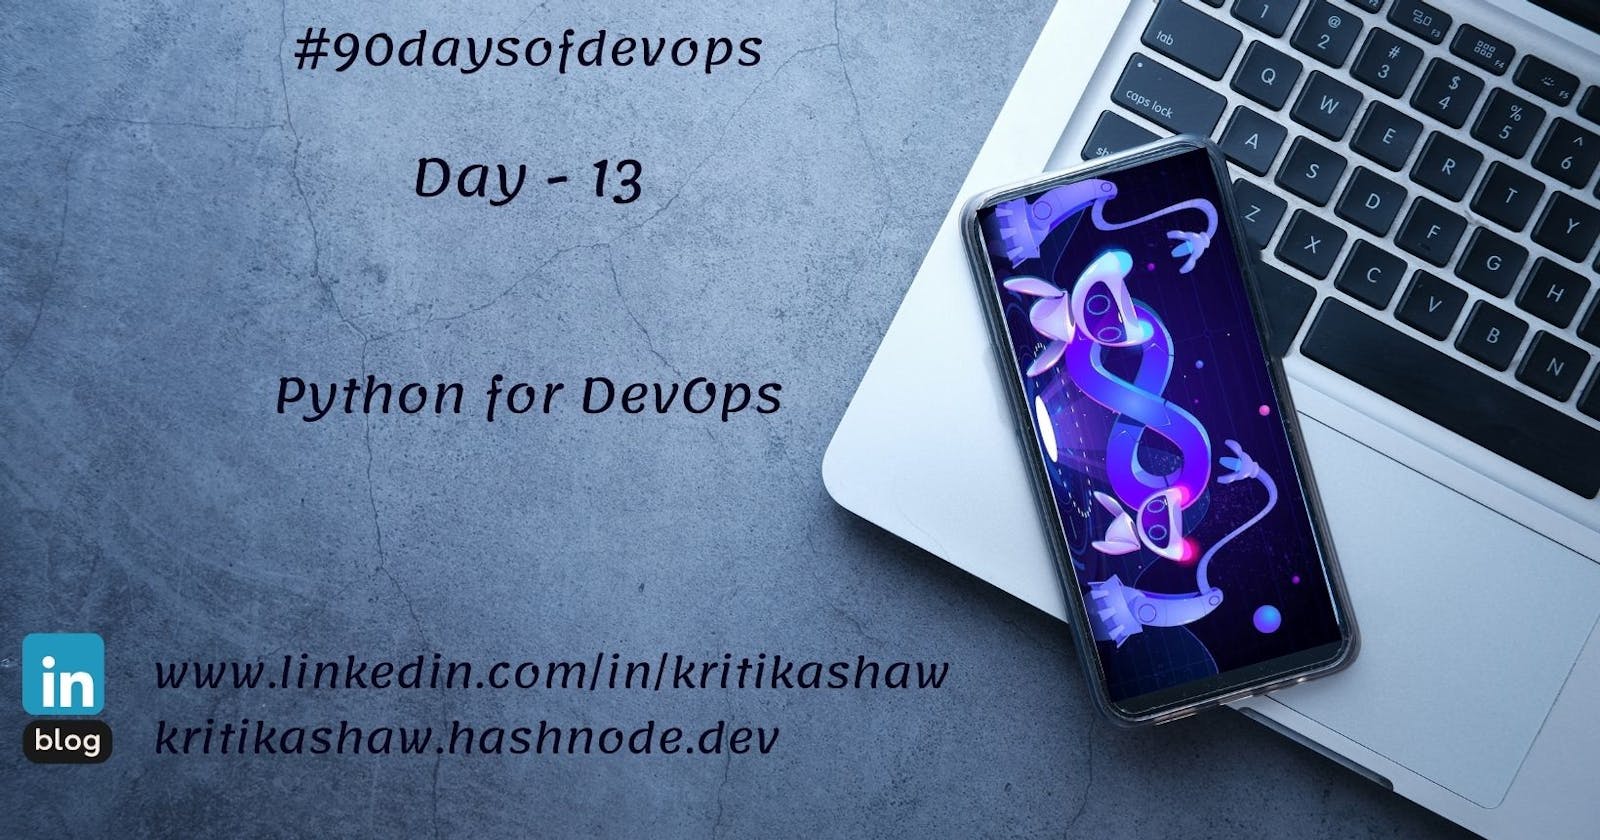 Day 13 Start with Python for DevOps